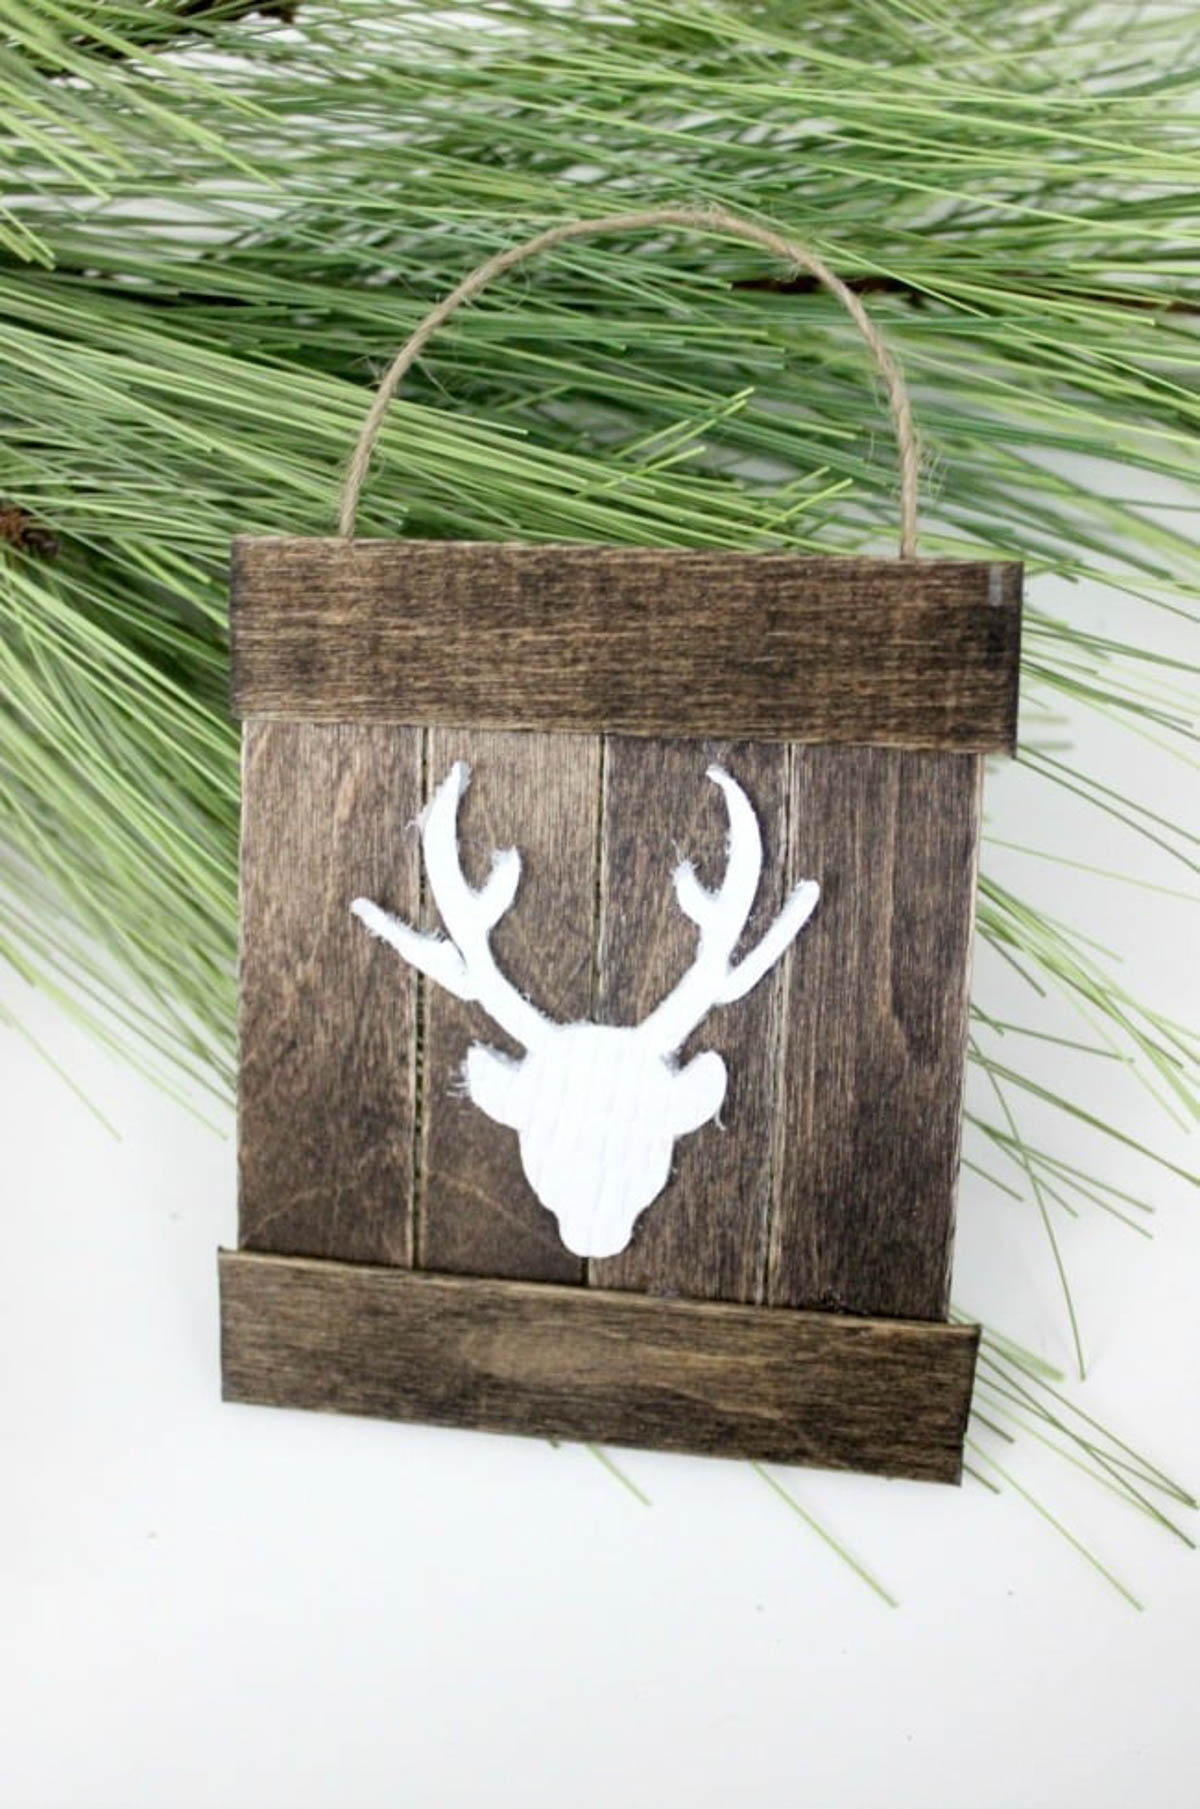 Image of a DIY mini deer pallet ornament